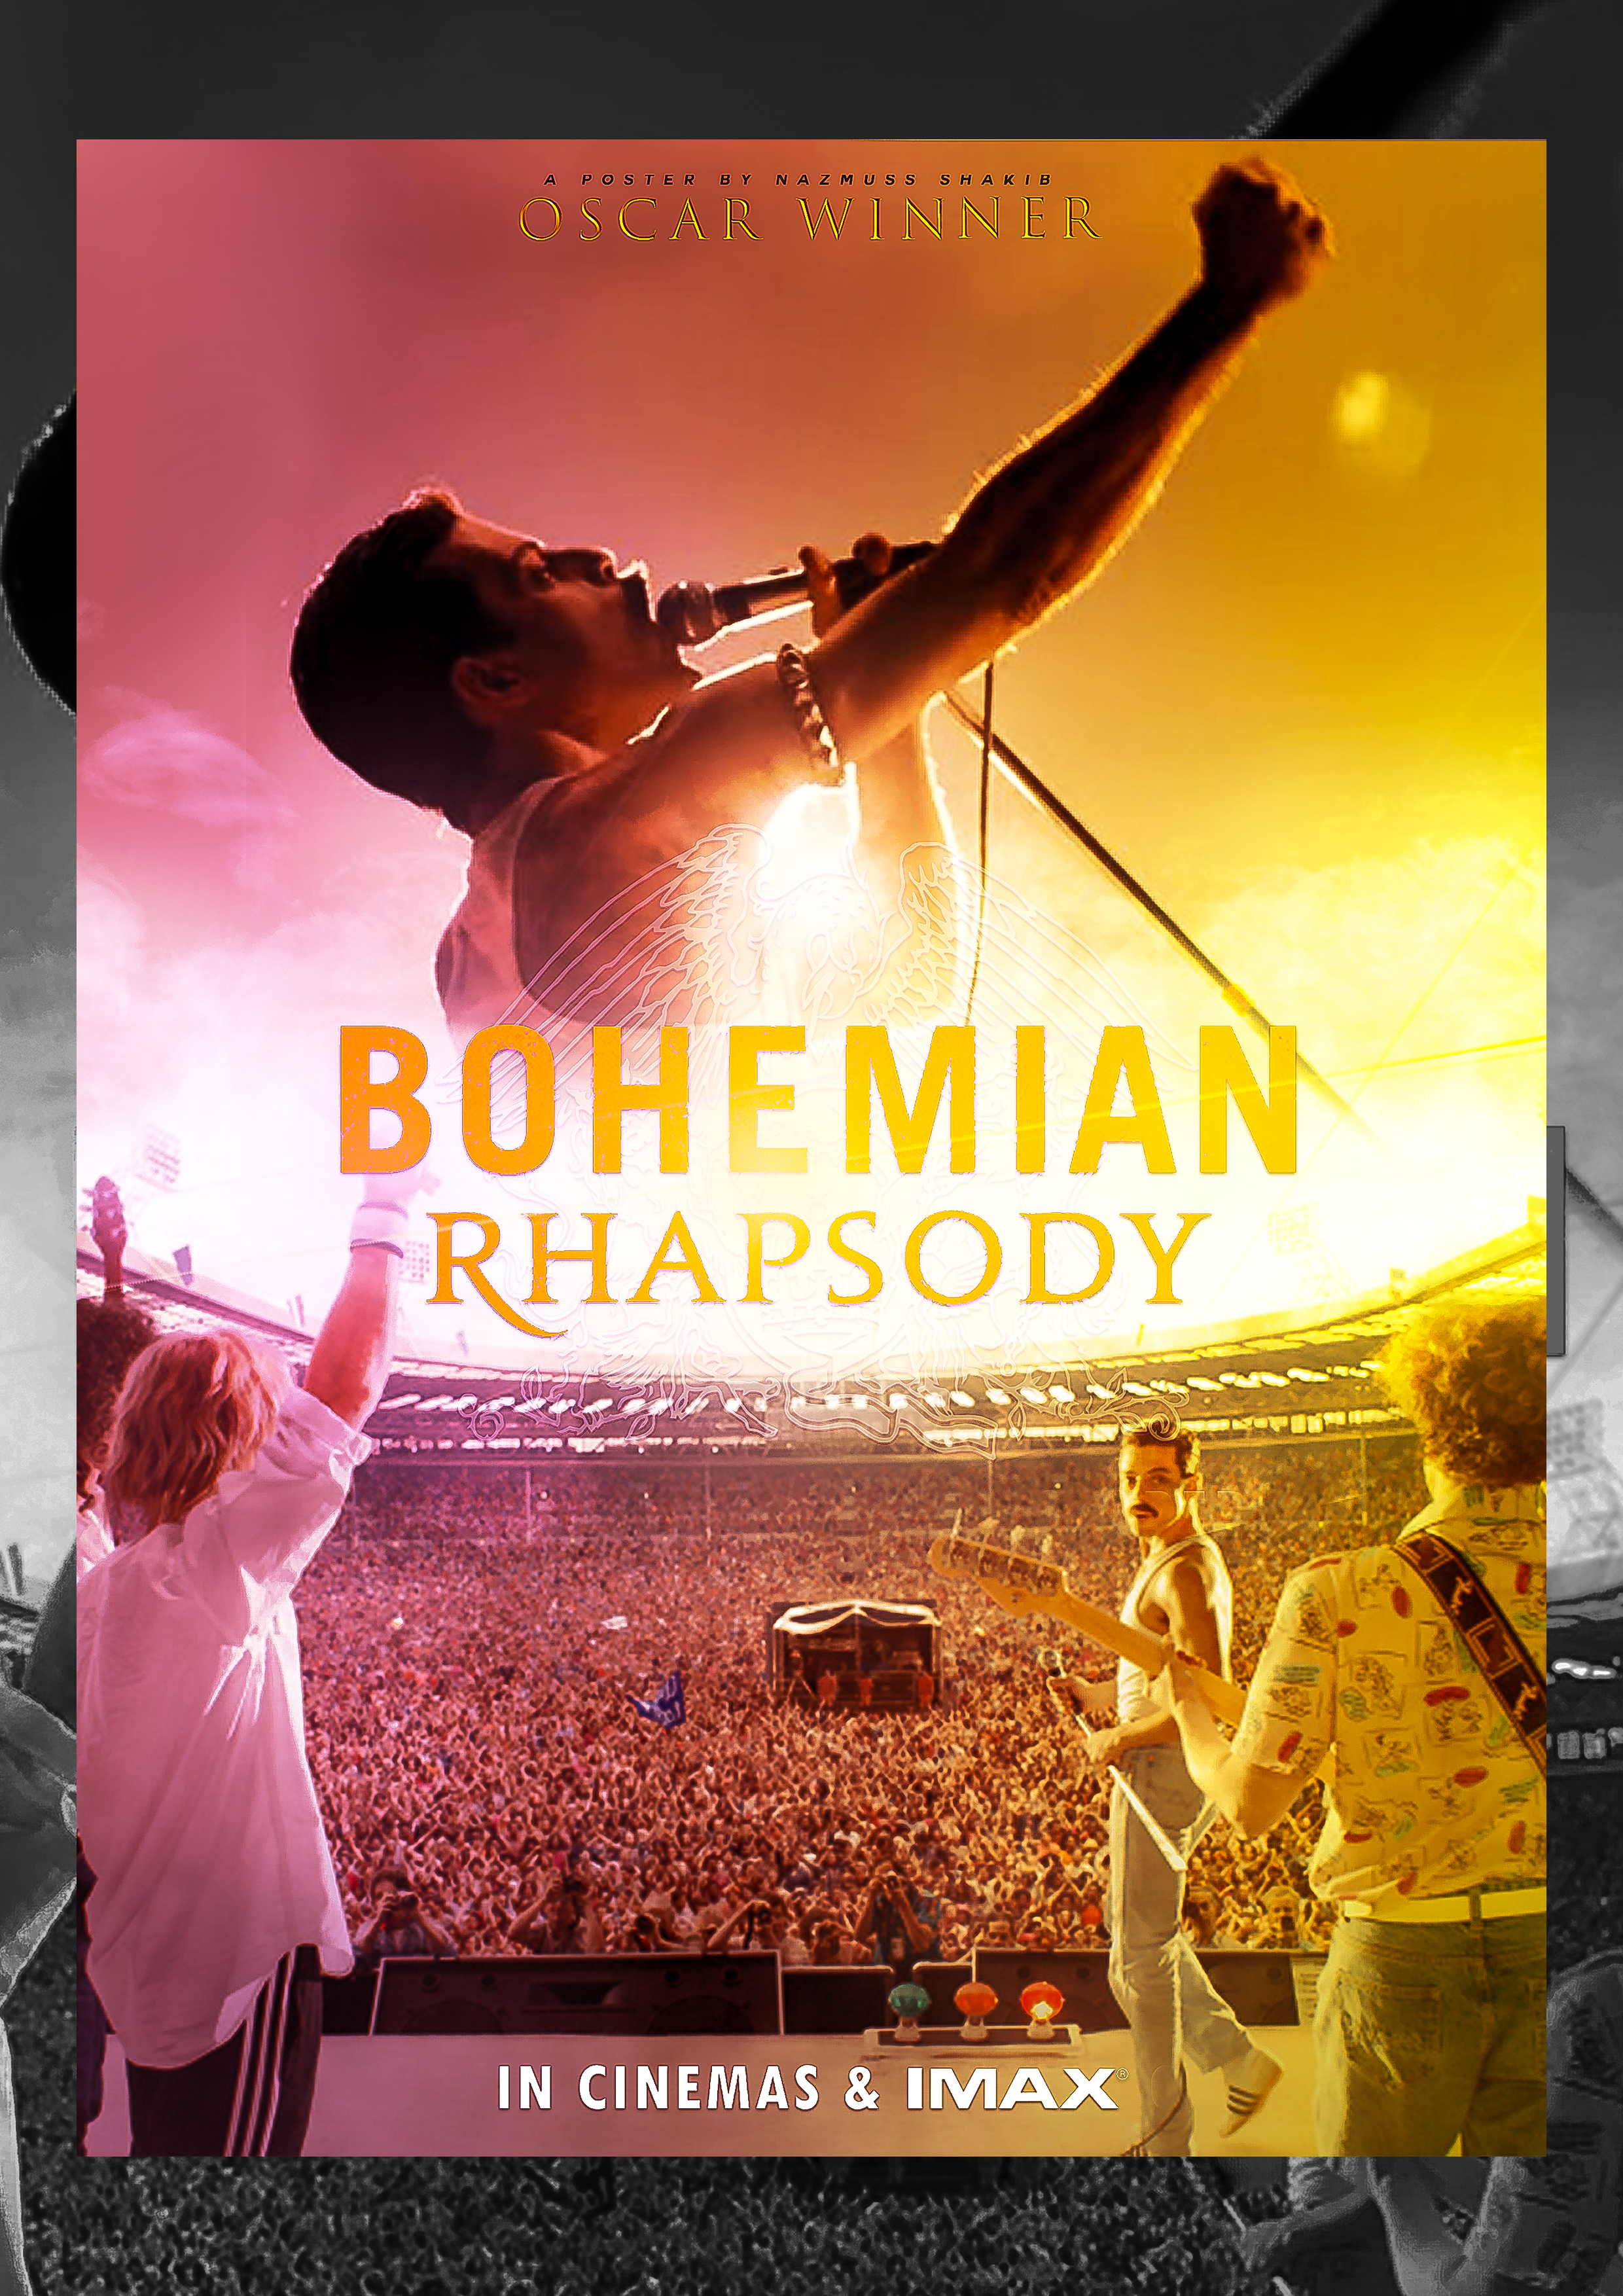 tragedie slutpunkt Estate Bohemian Rhapsody Oscar Winning Poster by NazmussShakib3 on DeviantArt